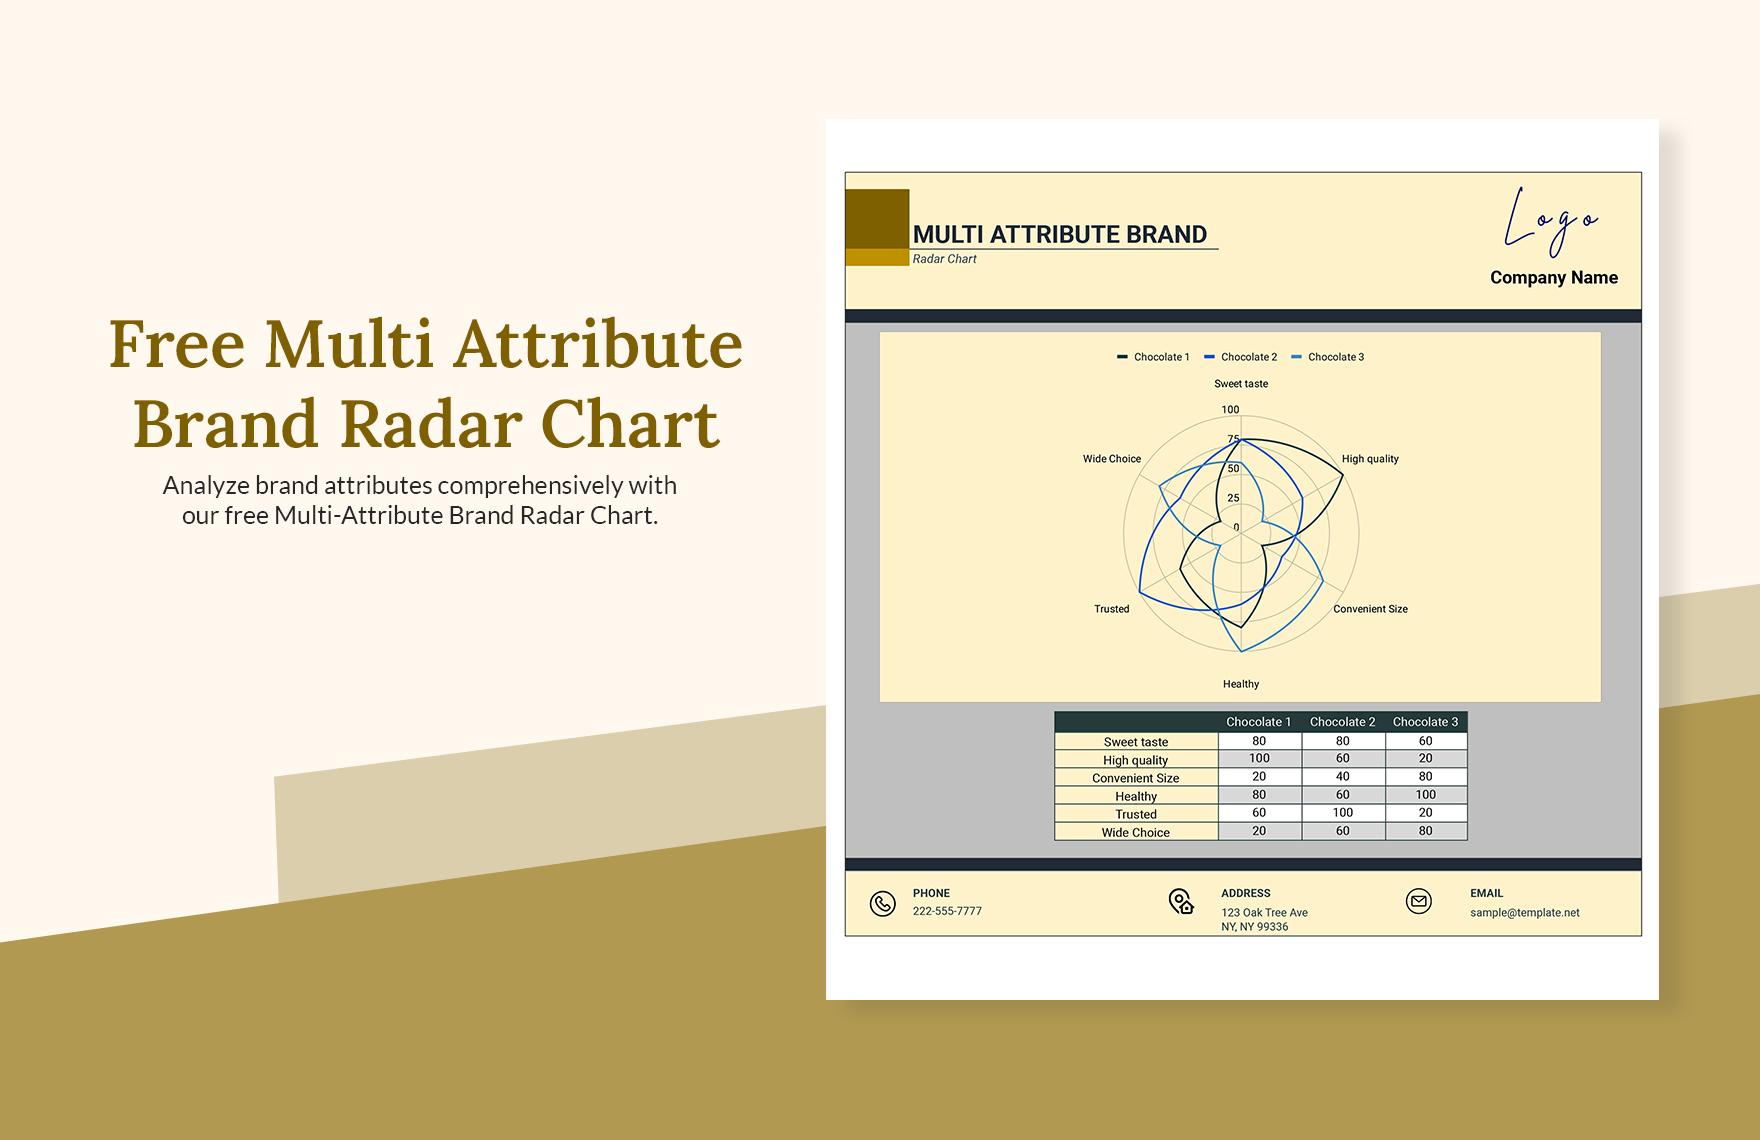 Free Multi Attribute Brand Radar Chart